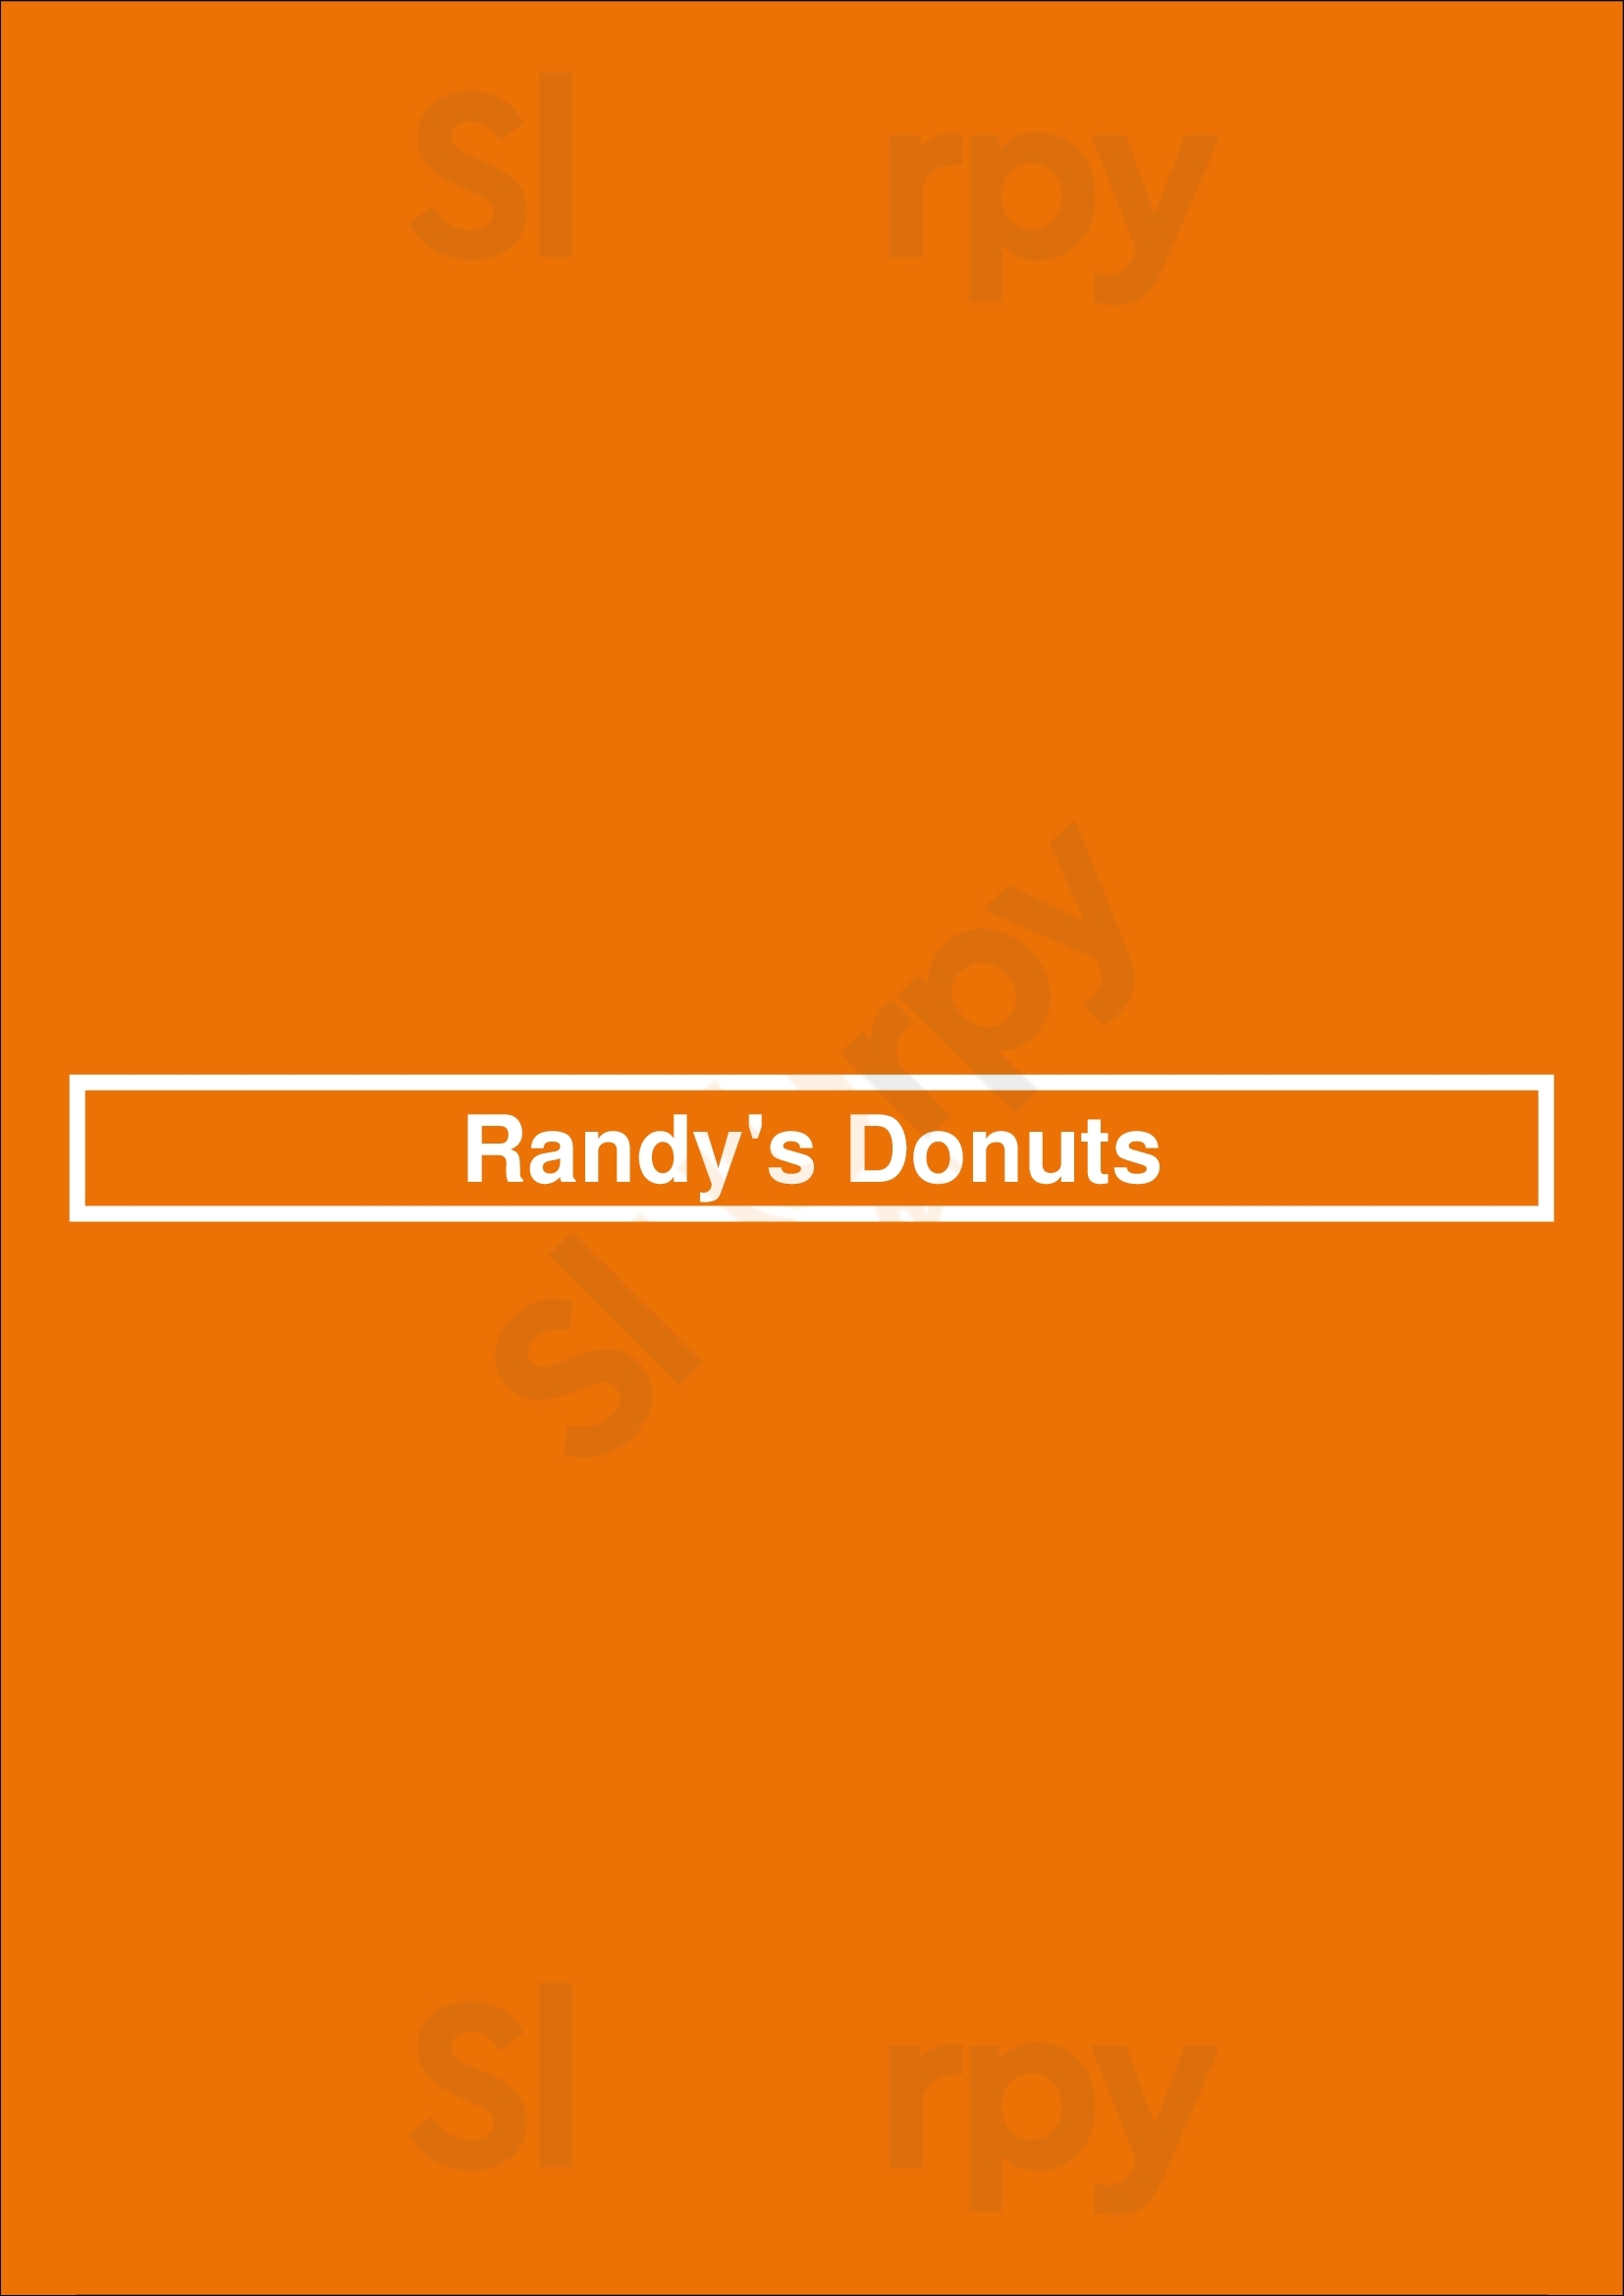 Randy's Donuts Los Angeles Menu - 1